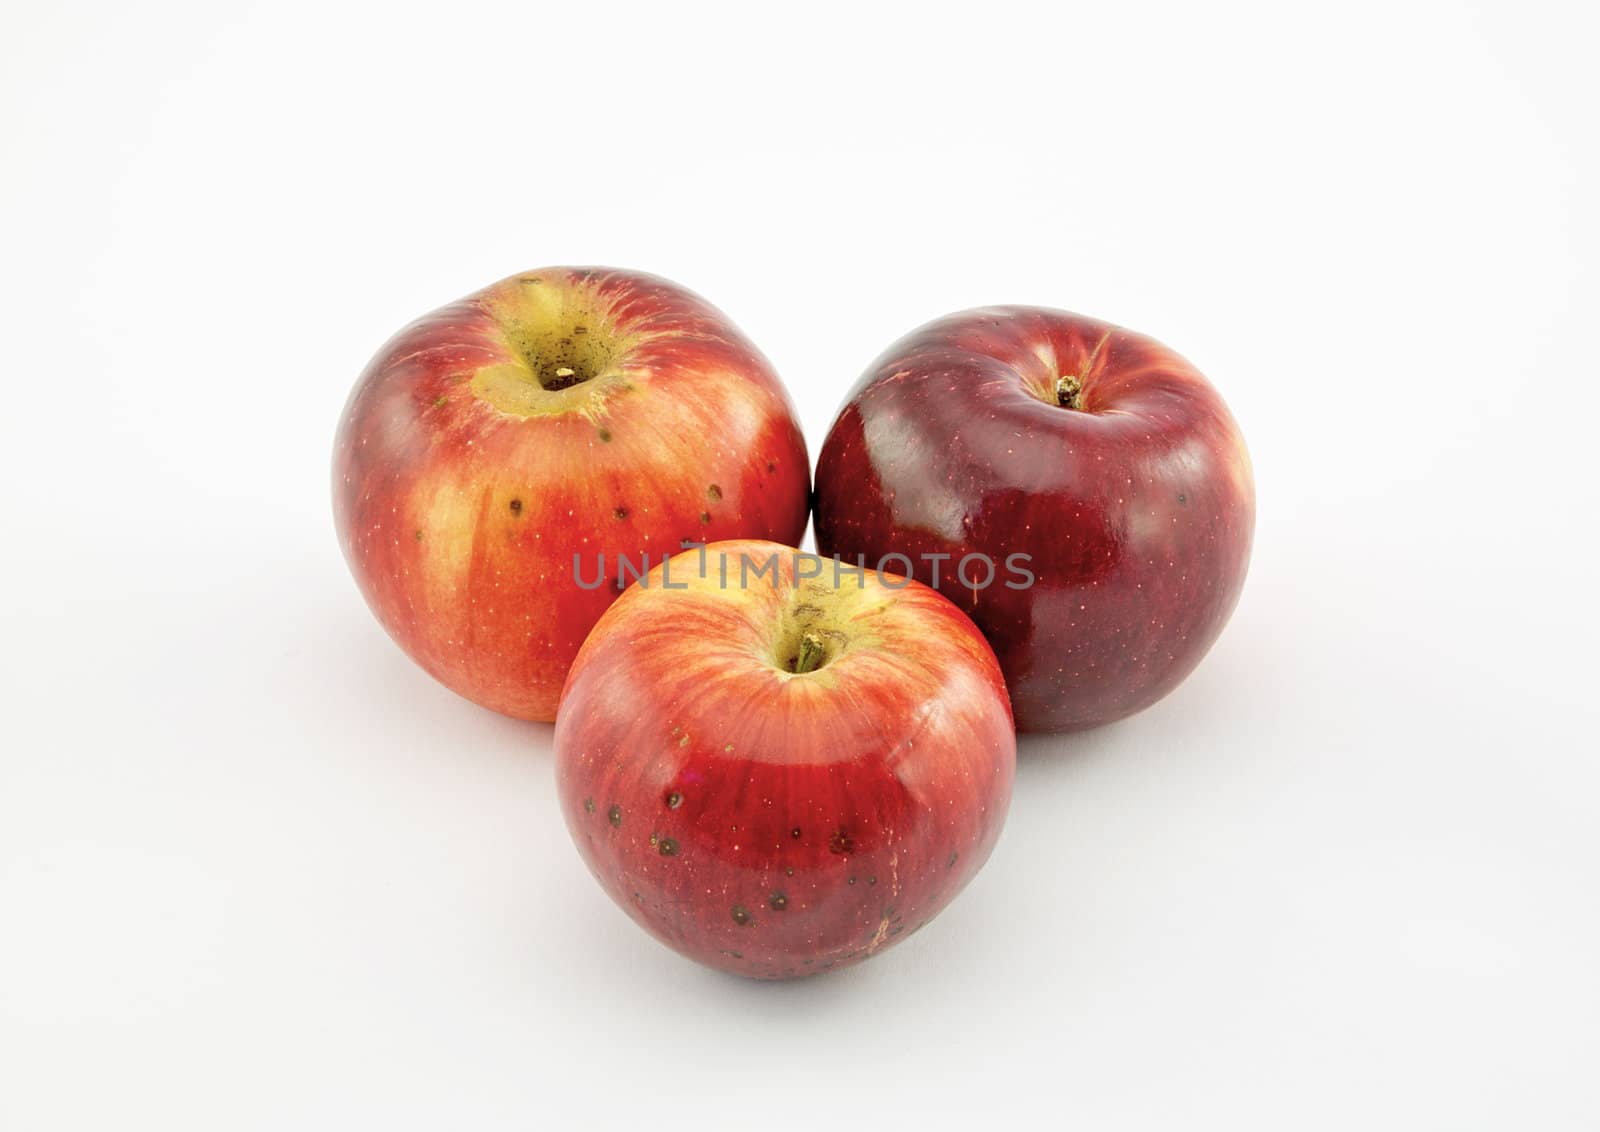 Red apples by renegadewanderer